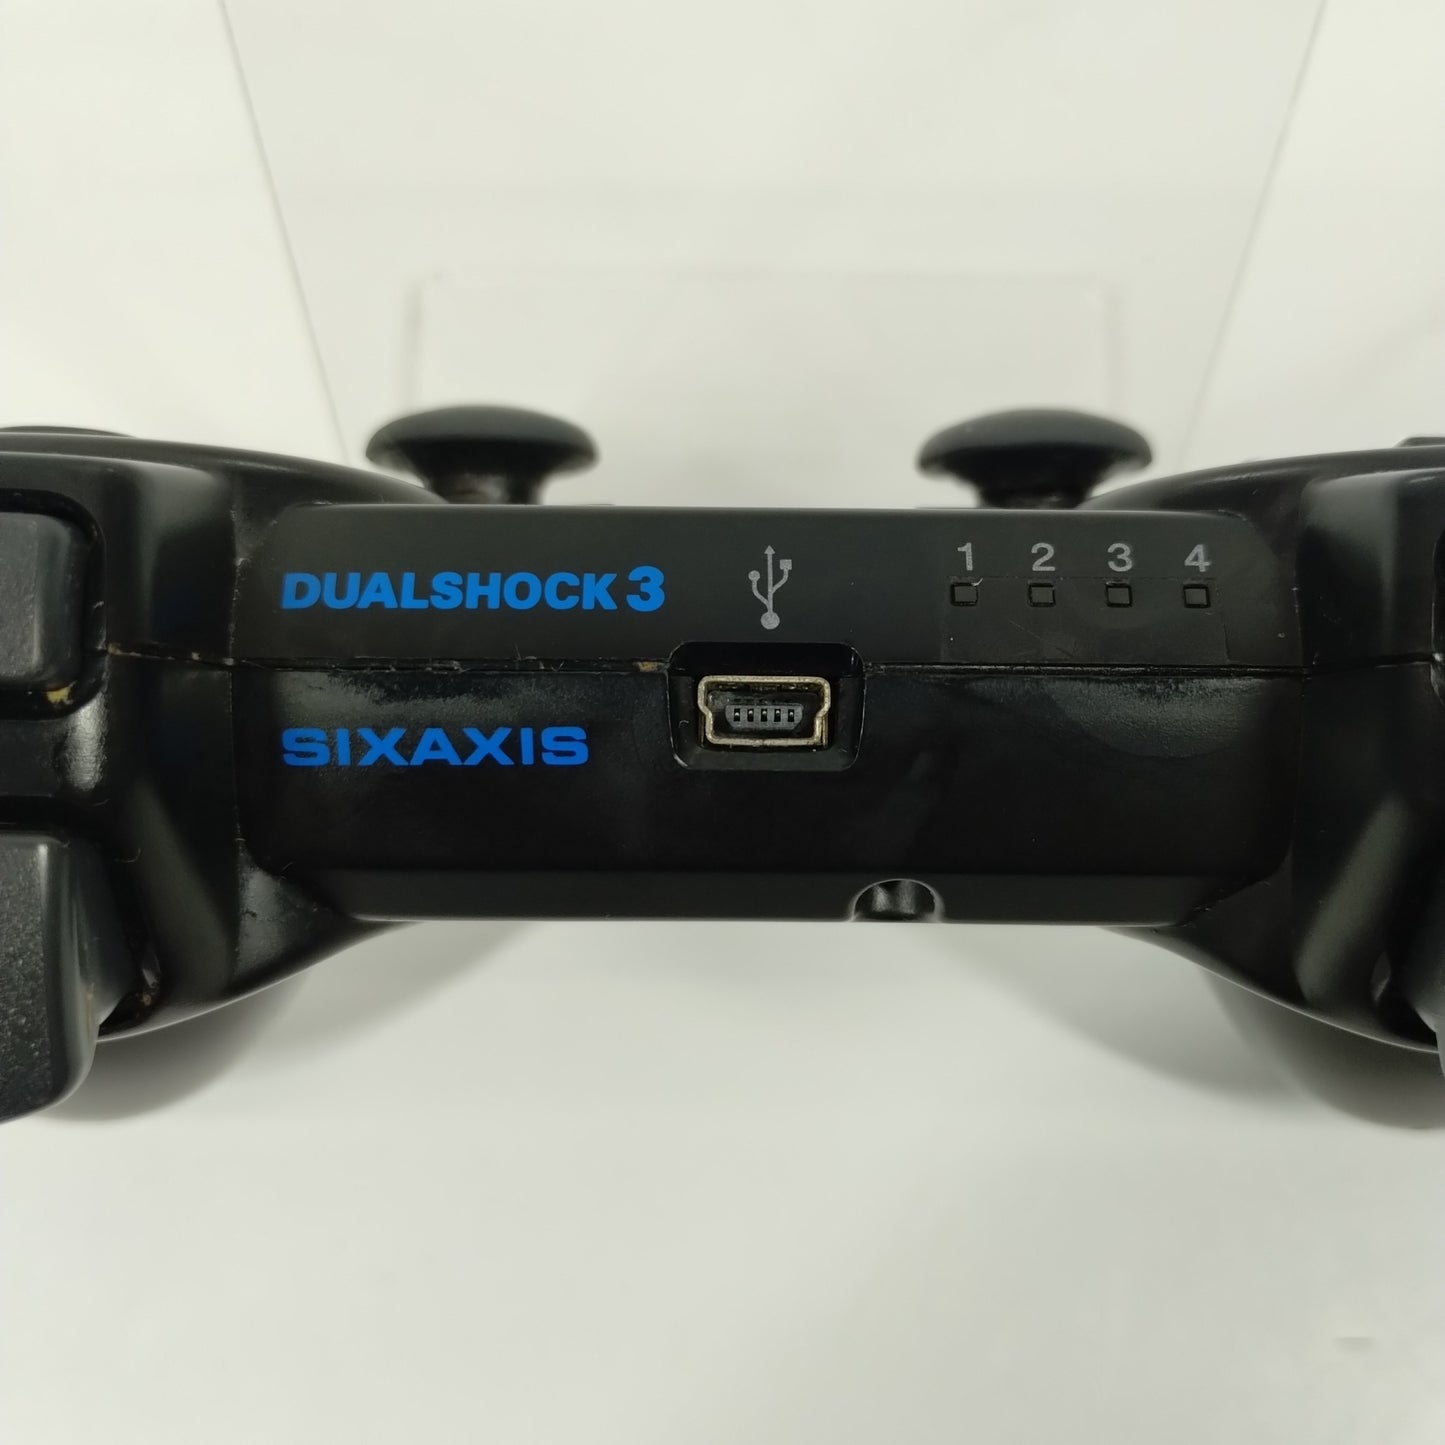 Sony Dualshock 3 SIXAXIS Wireless Controller for Playstation 3 Black CECHZC2U